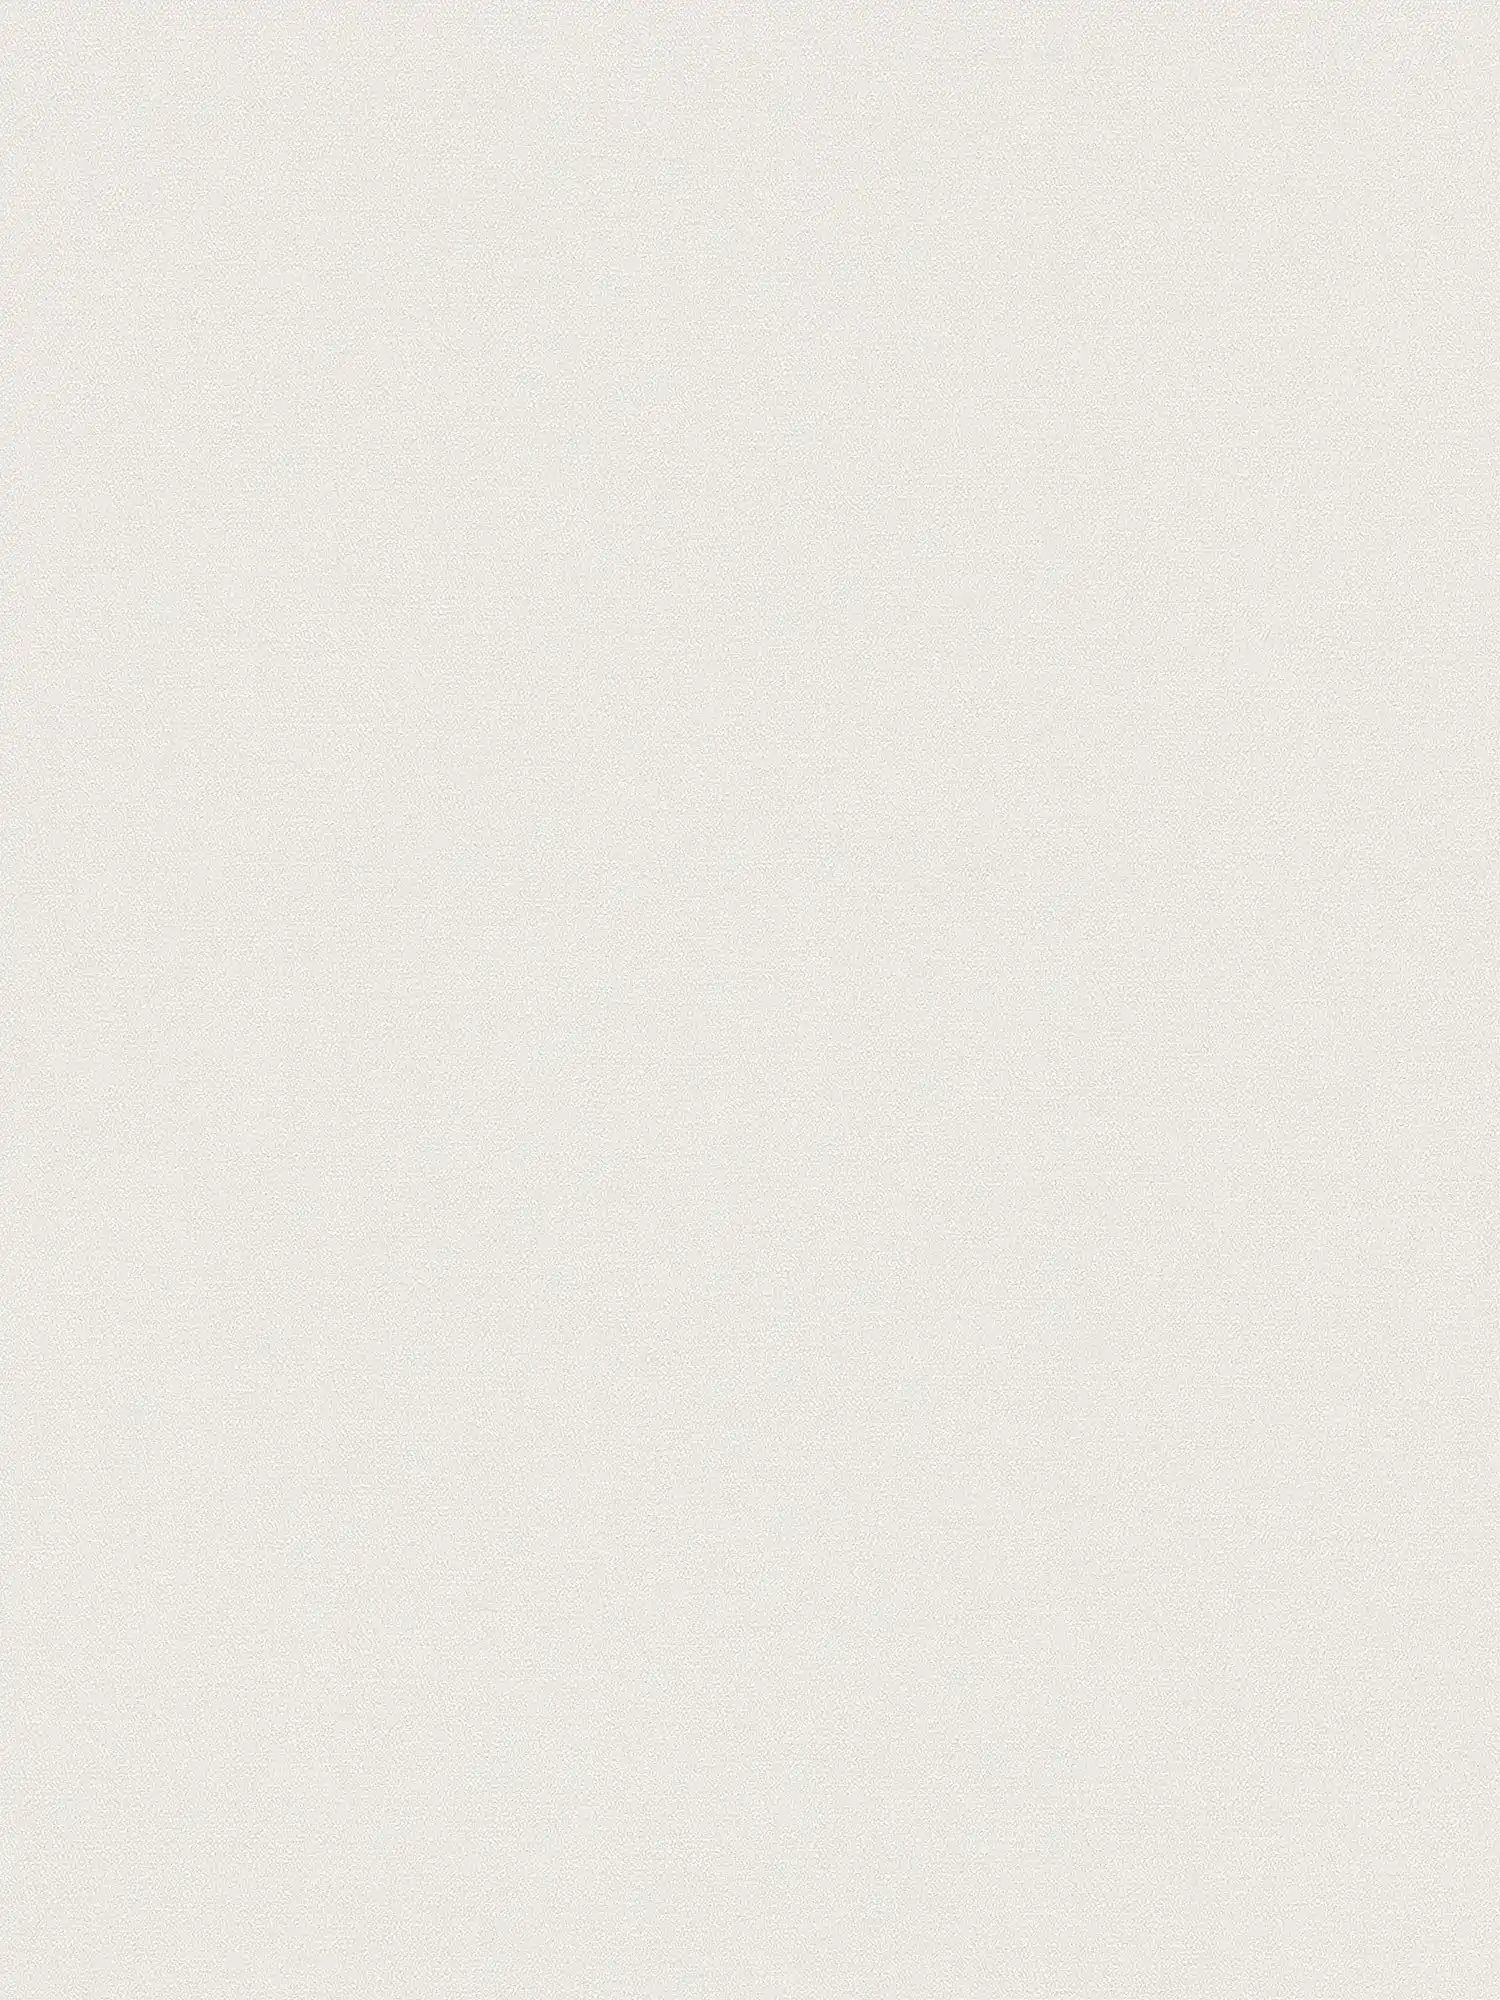 Vliesbehang monochroom in lichte tinten - wit
